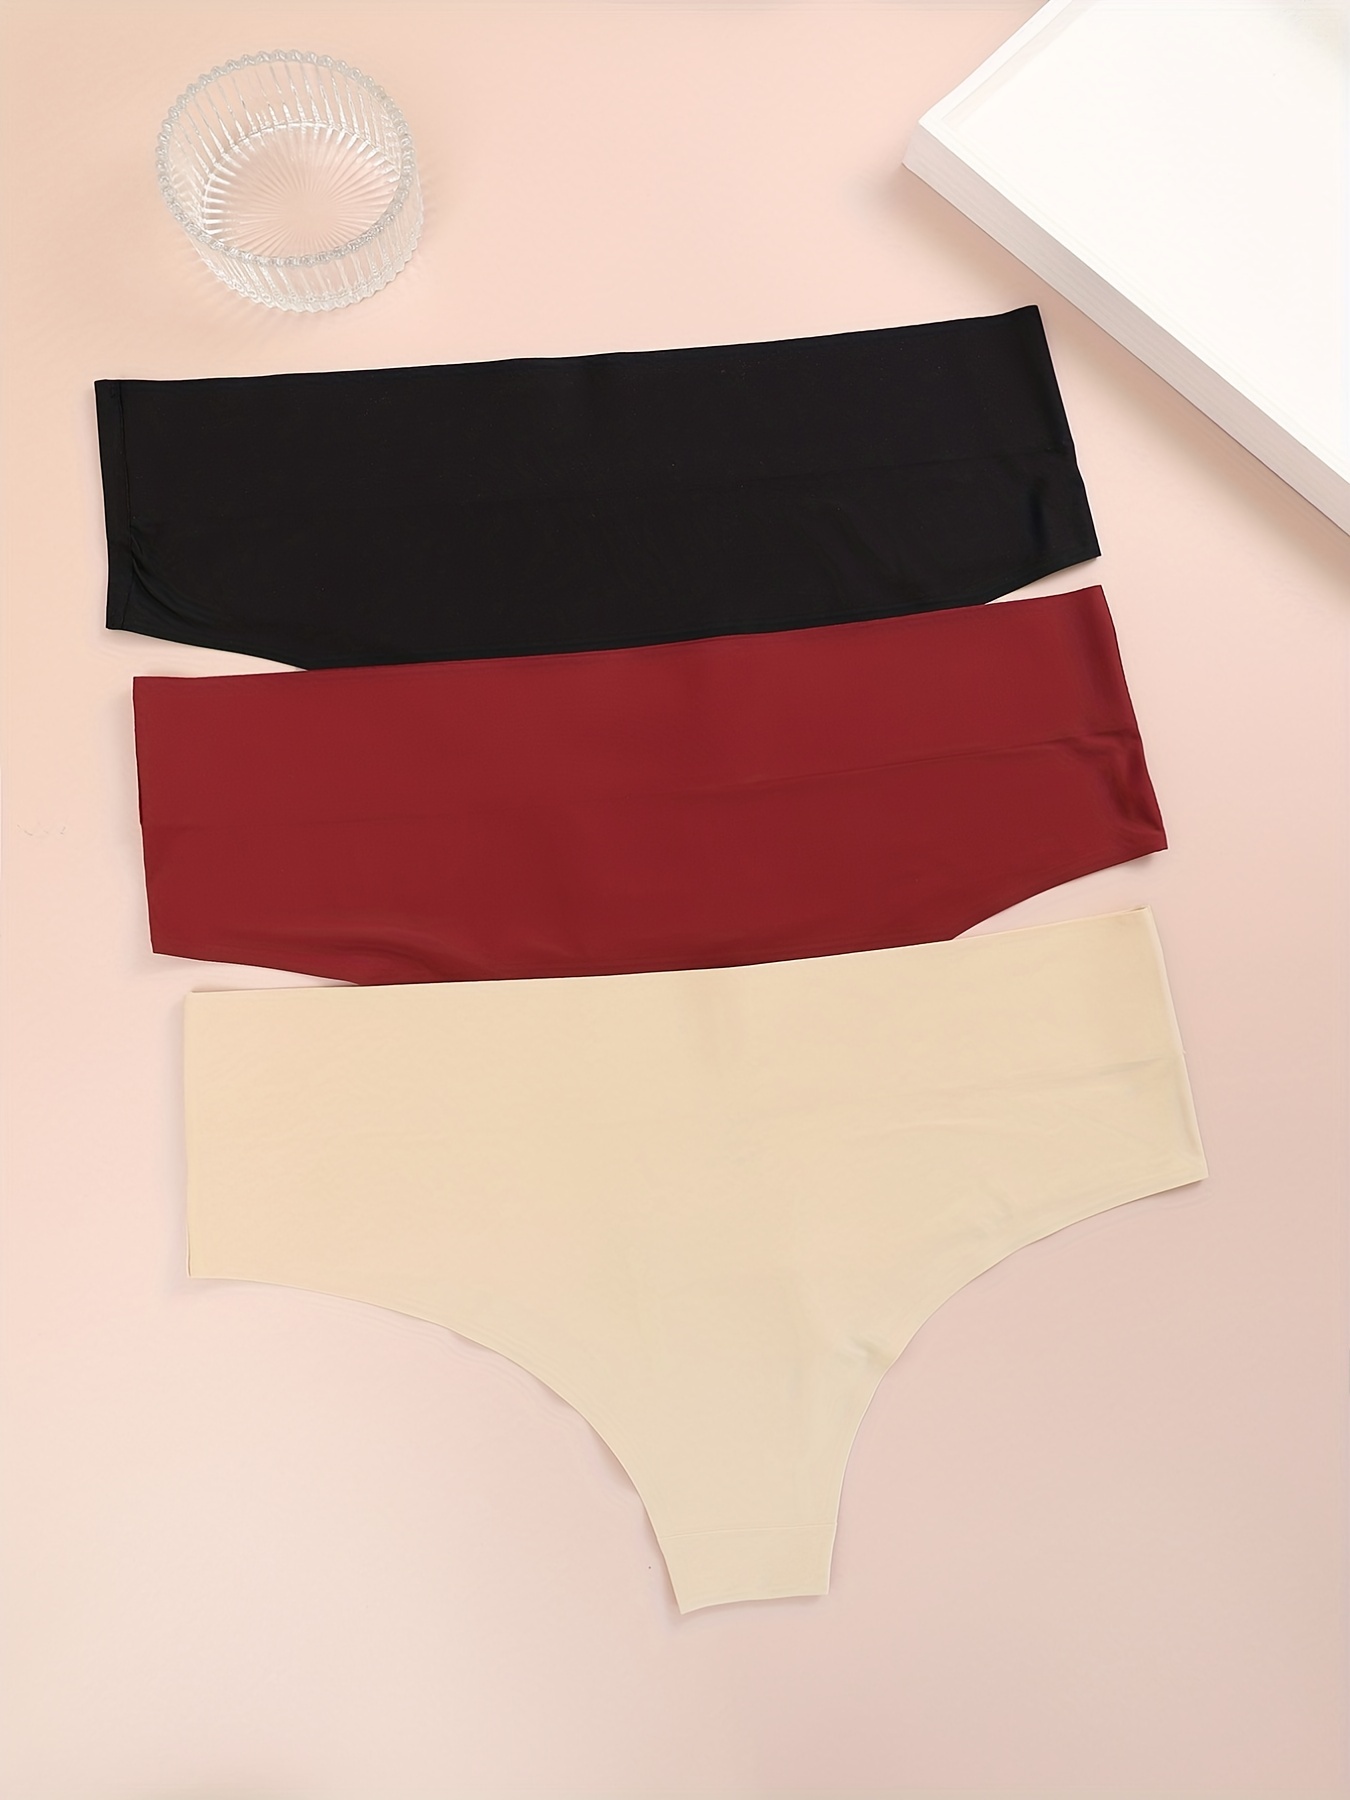 Fashion Cotton Underwear Women Panties Letter Print Seamless Sexy Briefs